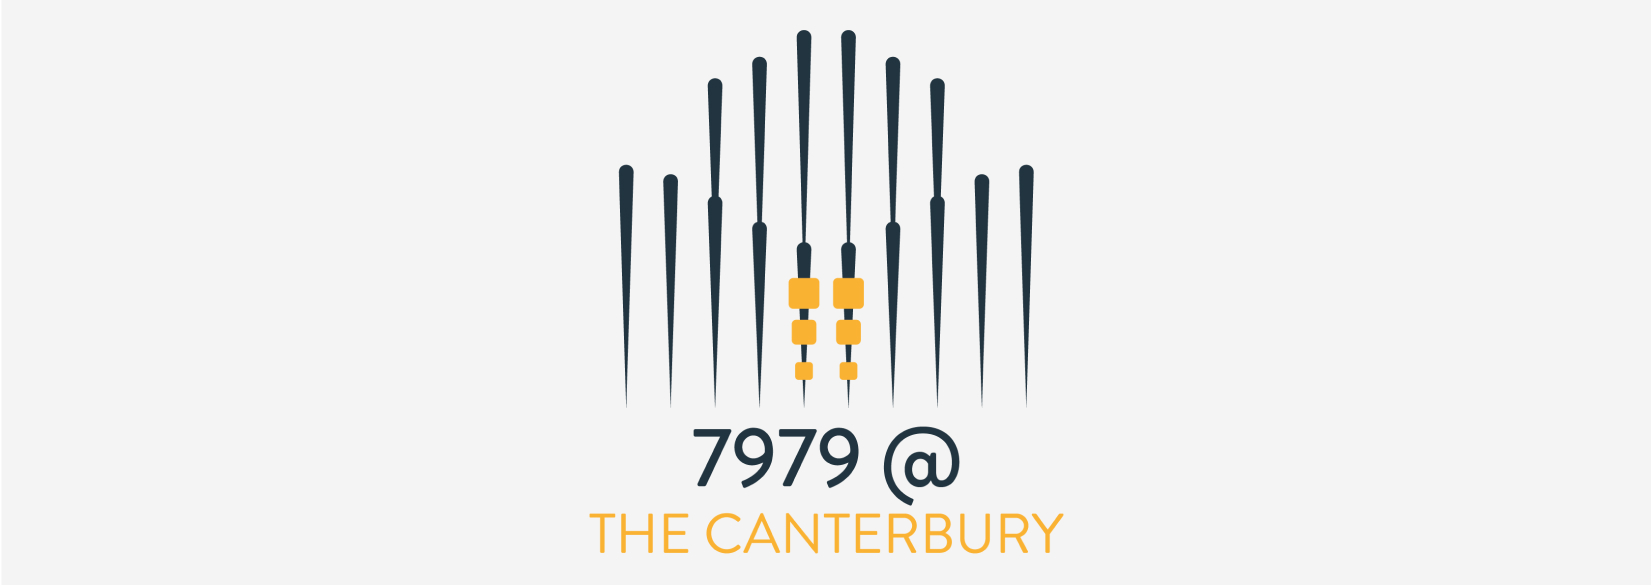 Avatardesk The Canterbury Case Study Banner